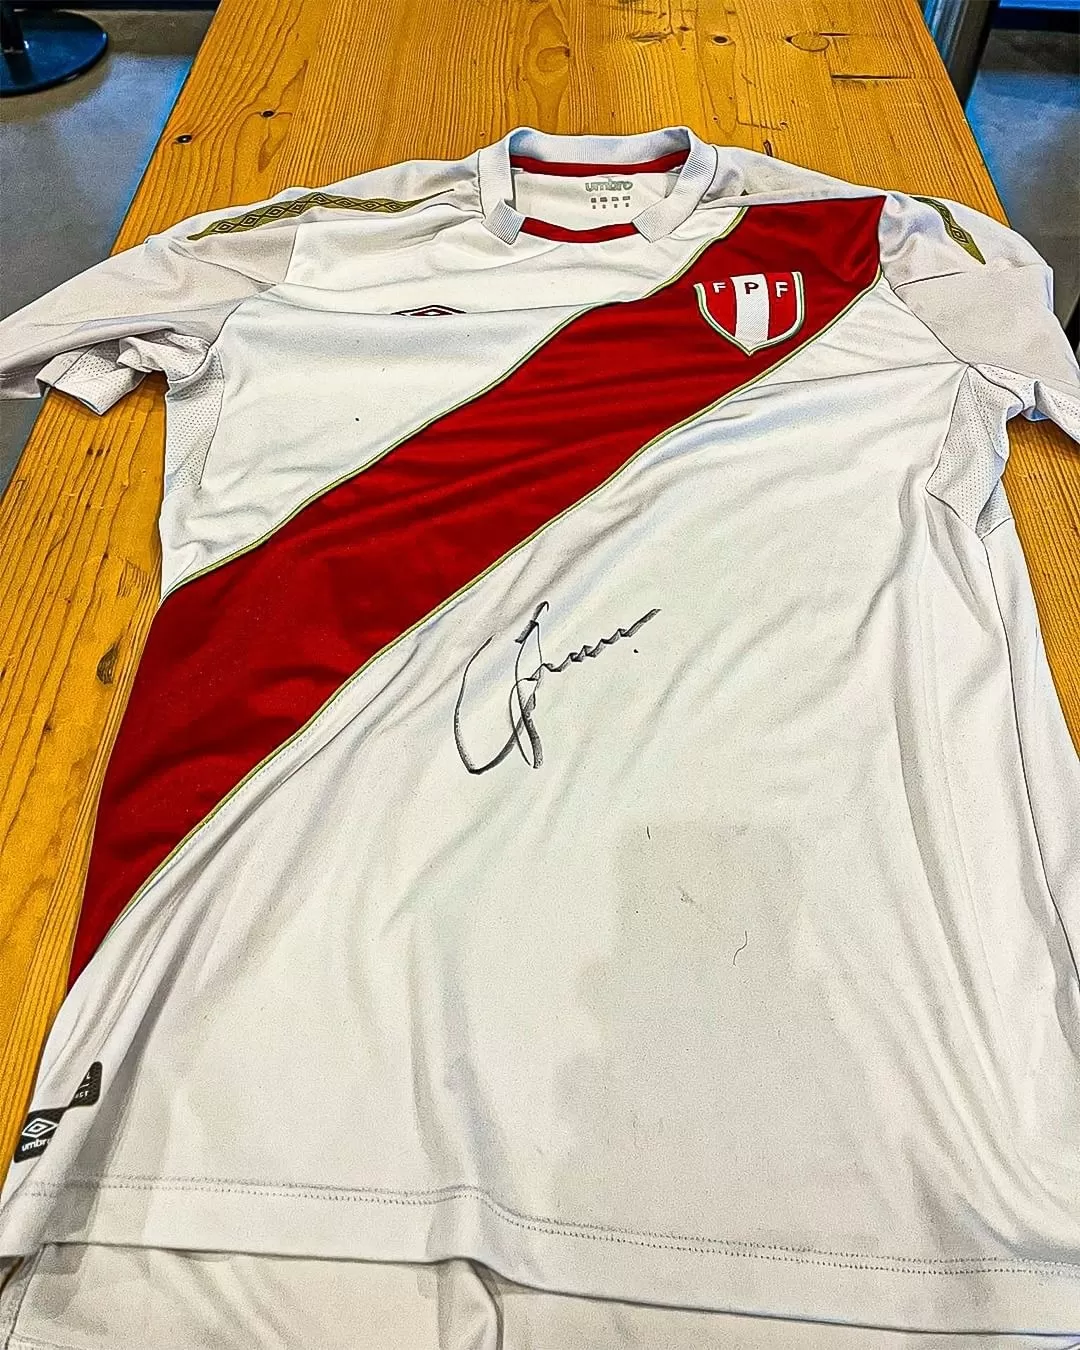 Camiseta peruana firmada por Oliver Sonne. | Foto: IG